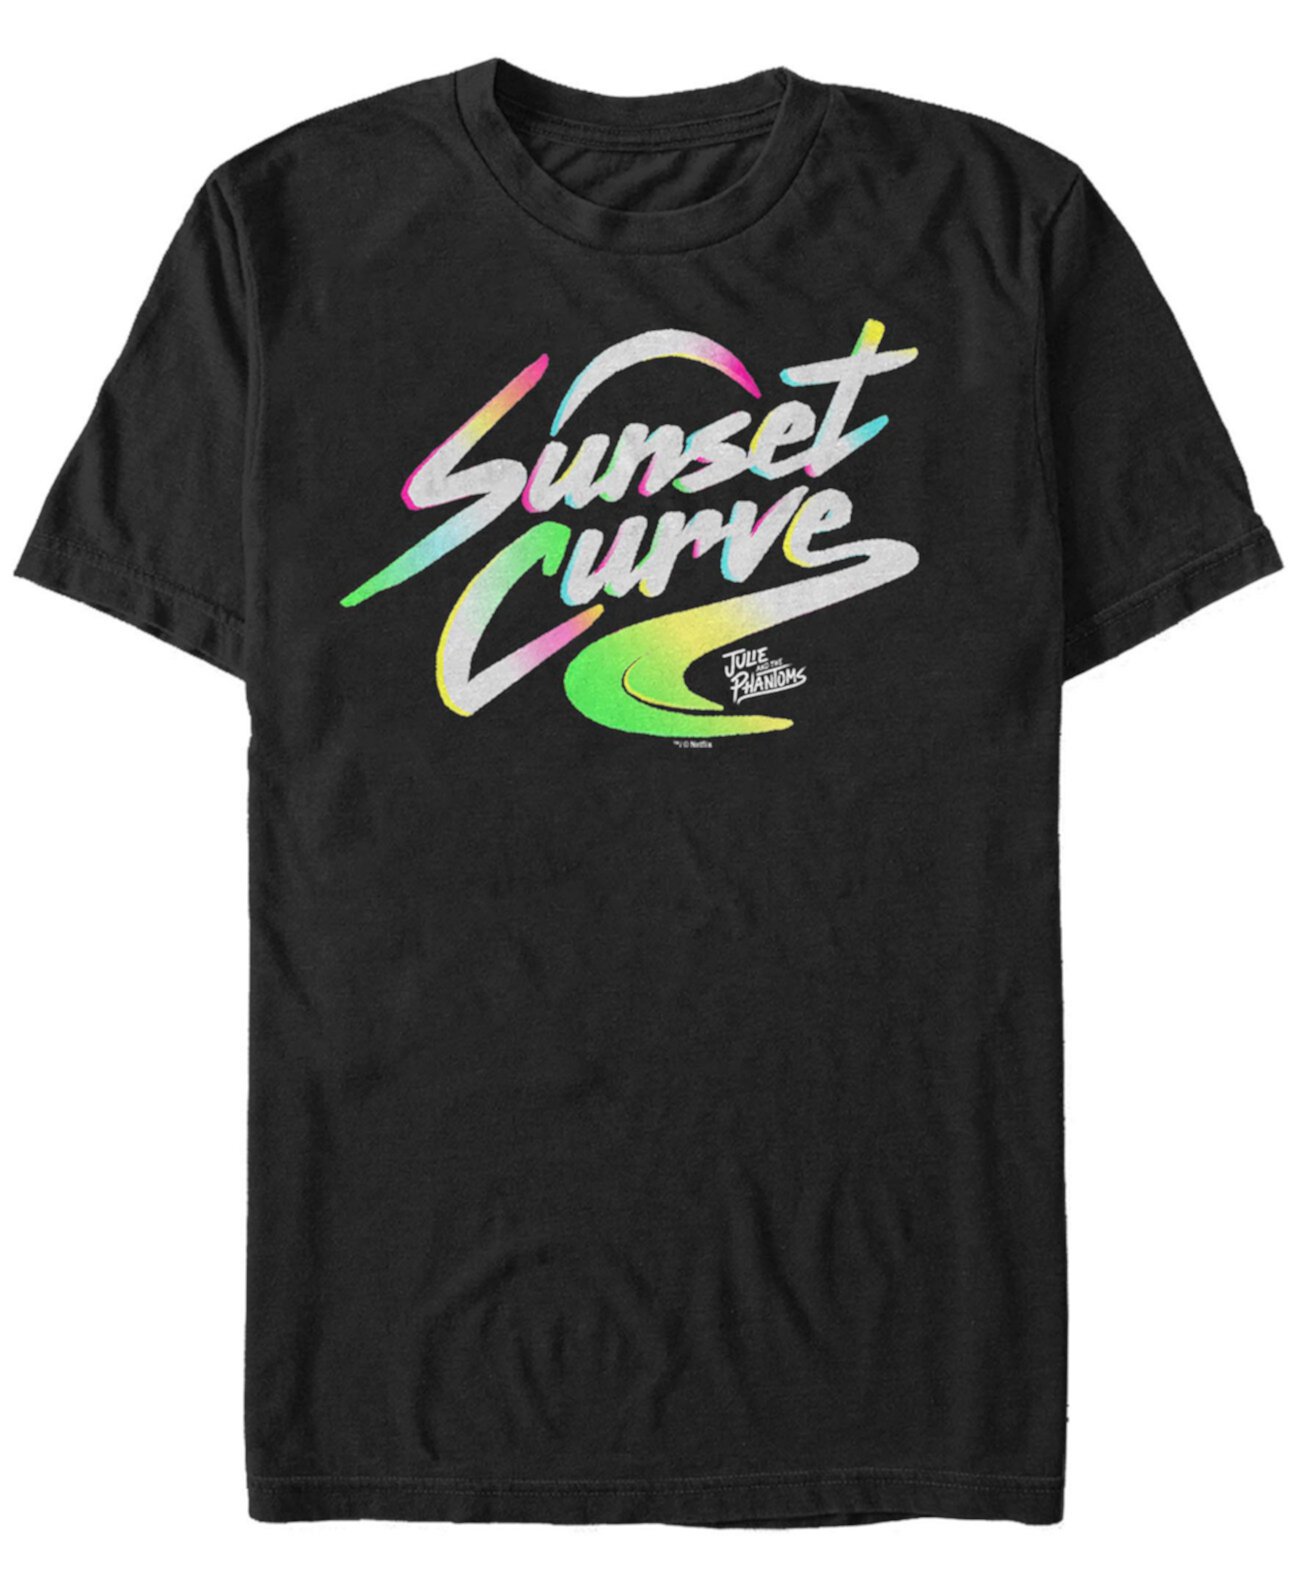 Мужская футболка с коротким рукавом и логотипом Sunset Curve Julie and The Phantoms FIFTH SUN